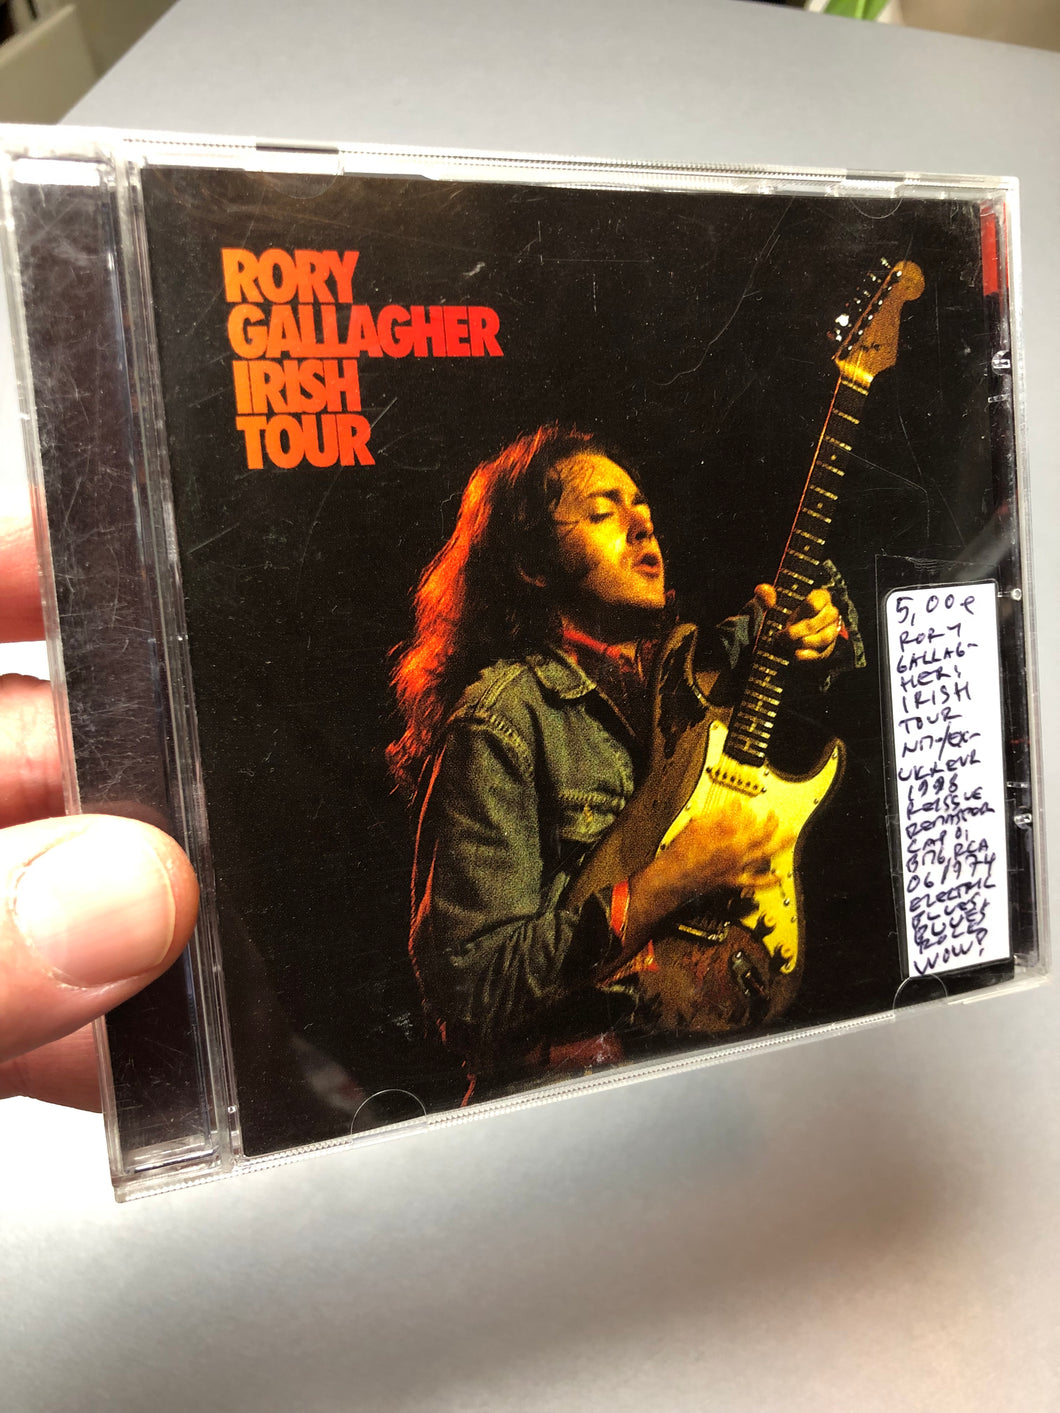 Rory Gallagher: Irish Tour, reissue, remastered, UK & Europe 1998